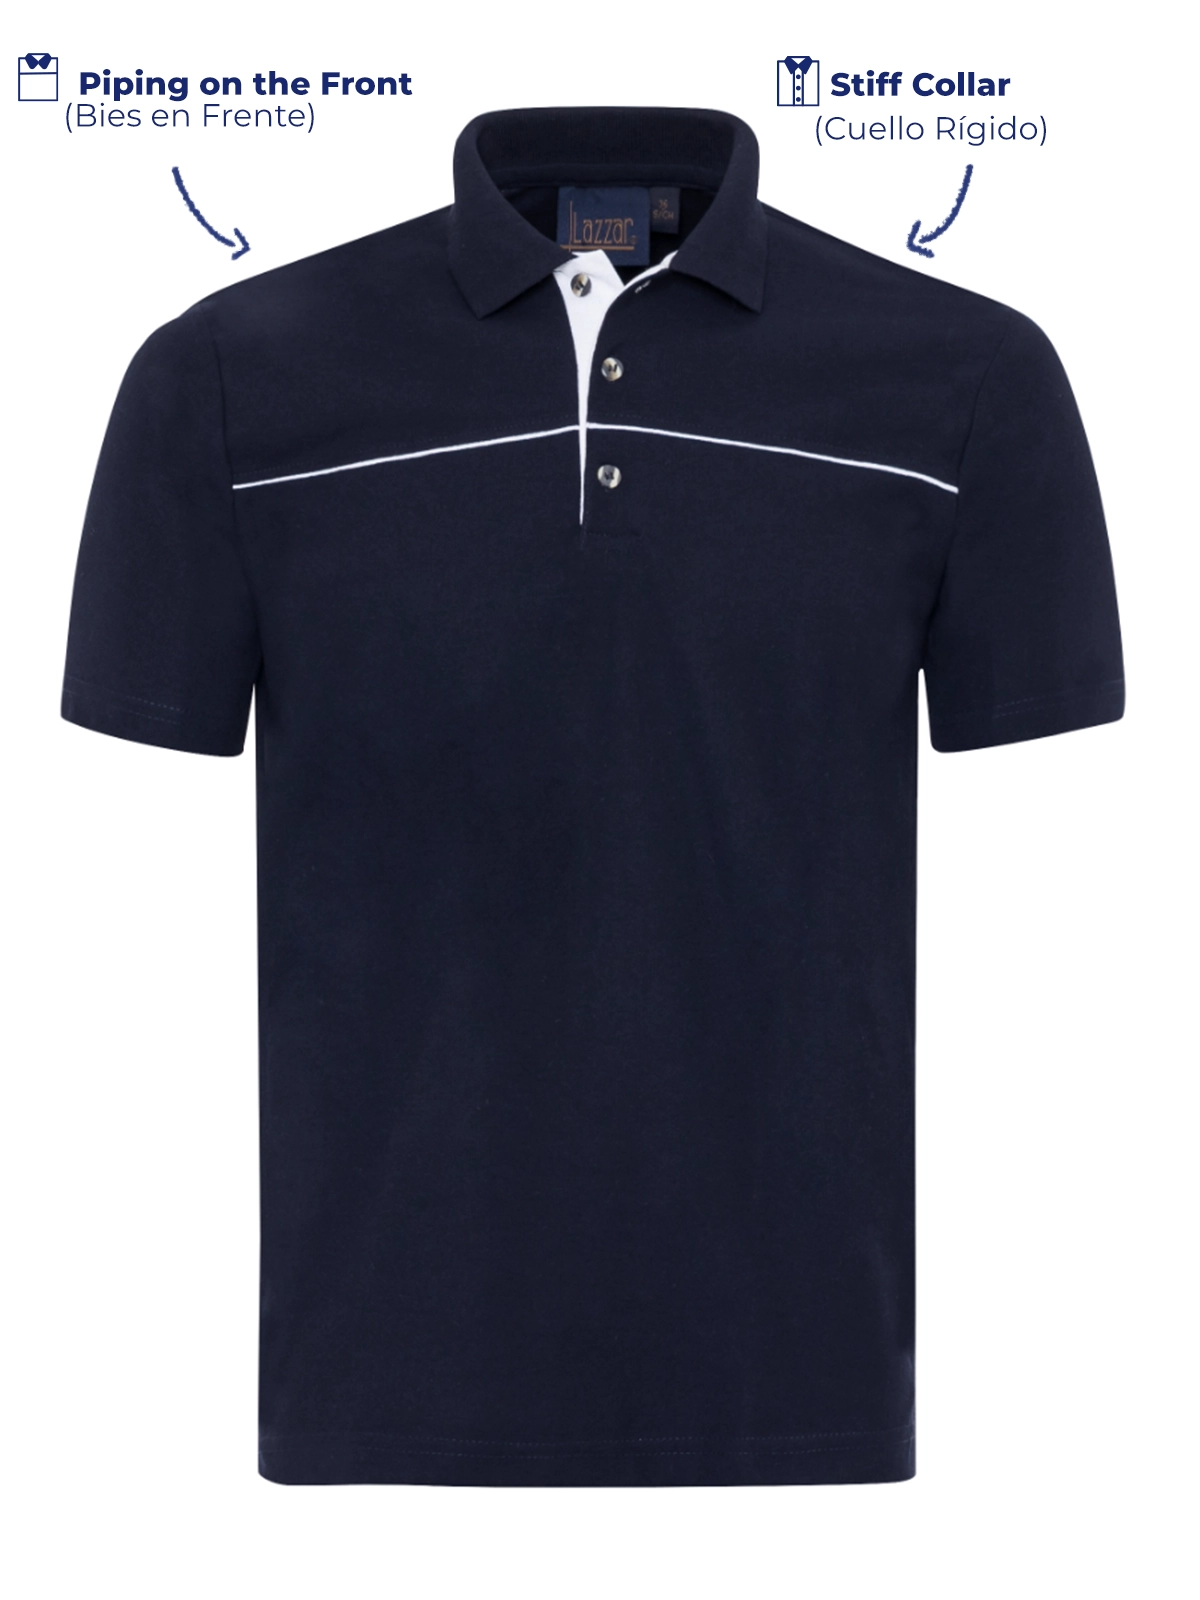 Polo Shirt W506 navy blue color